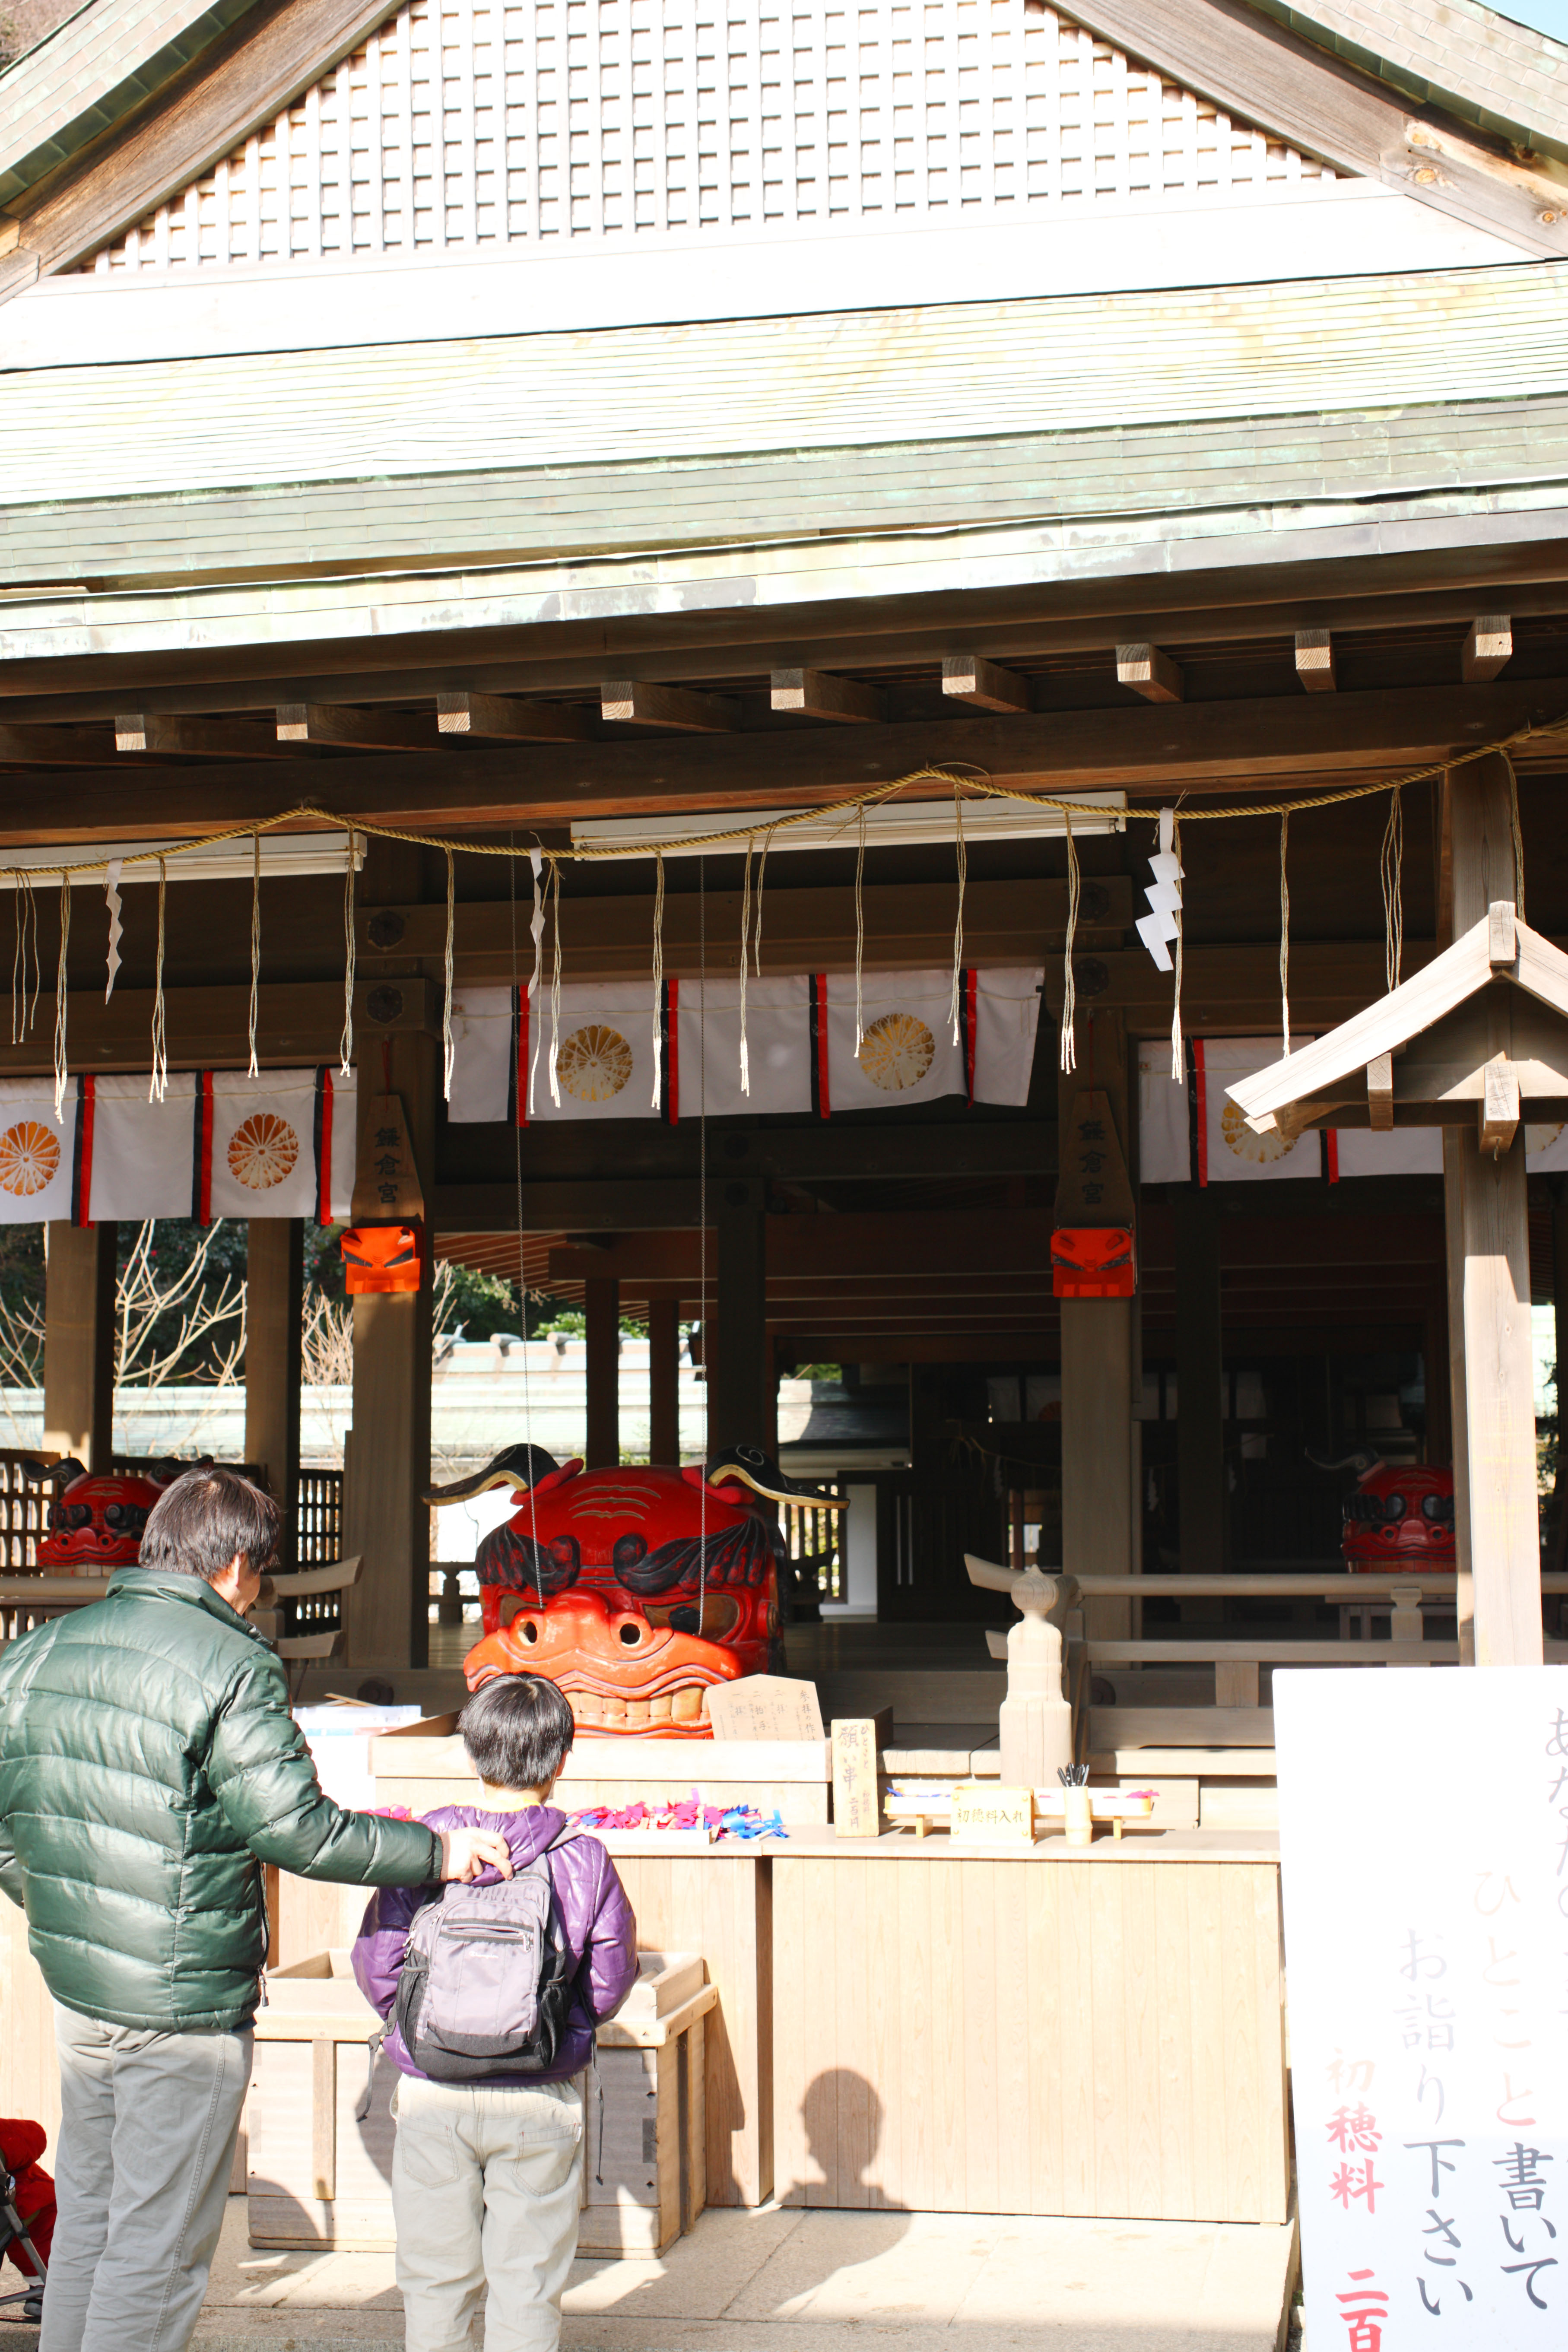 photo, la matire, libre, amnage, dcrivez, photo de la rserve,Kamakura-gu Temple temple de devant, Temple shintoste, L'empereur Meiji, Kamakura, Masashige Kusuki